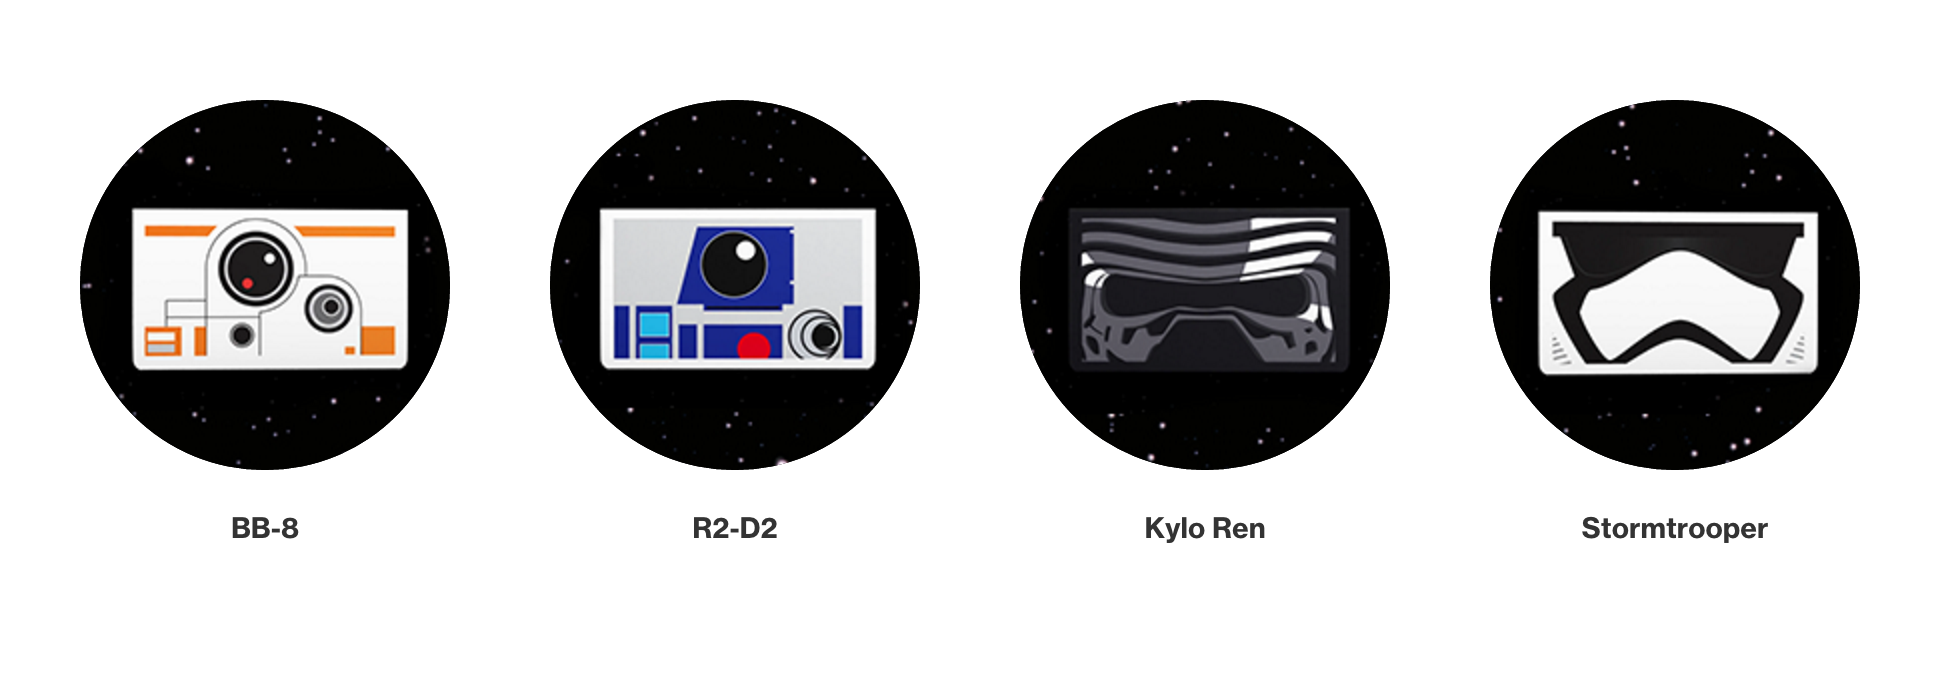 Verizon awakens the Force with Star Wars-themed Google Cardboard viewers